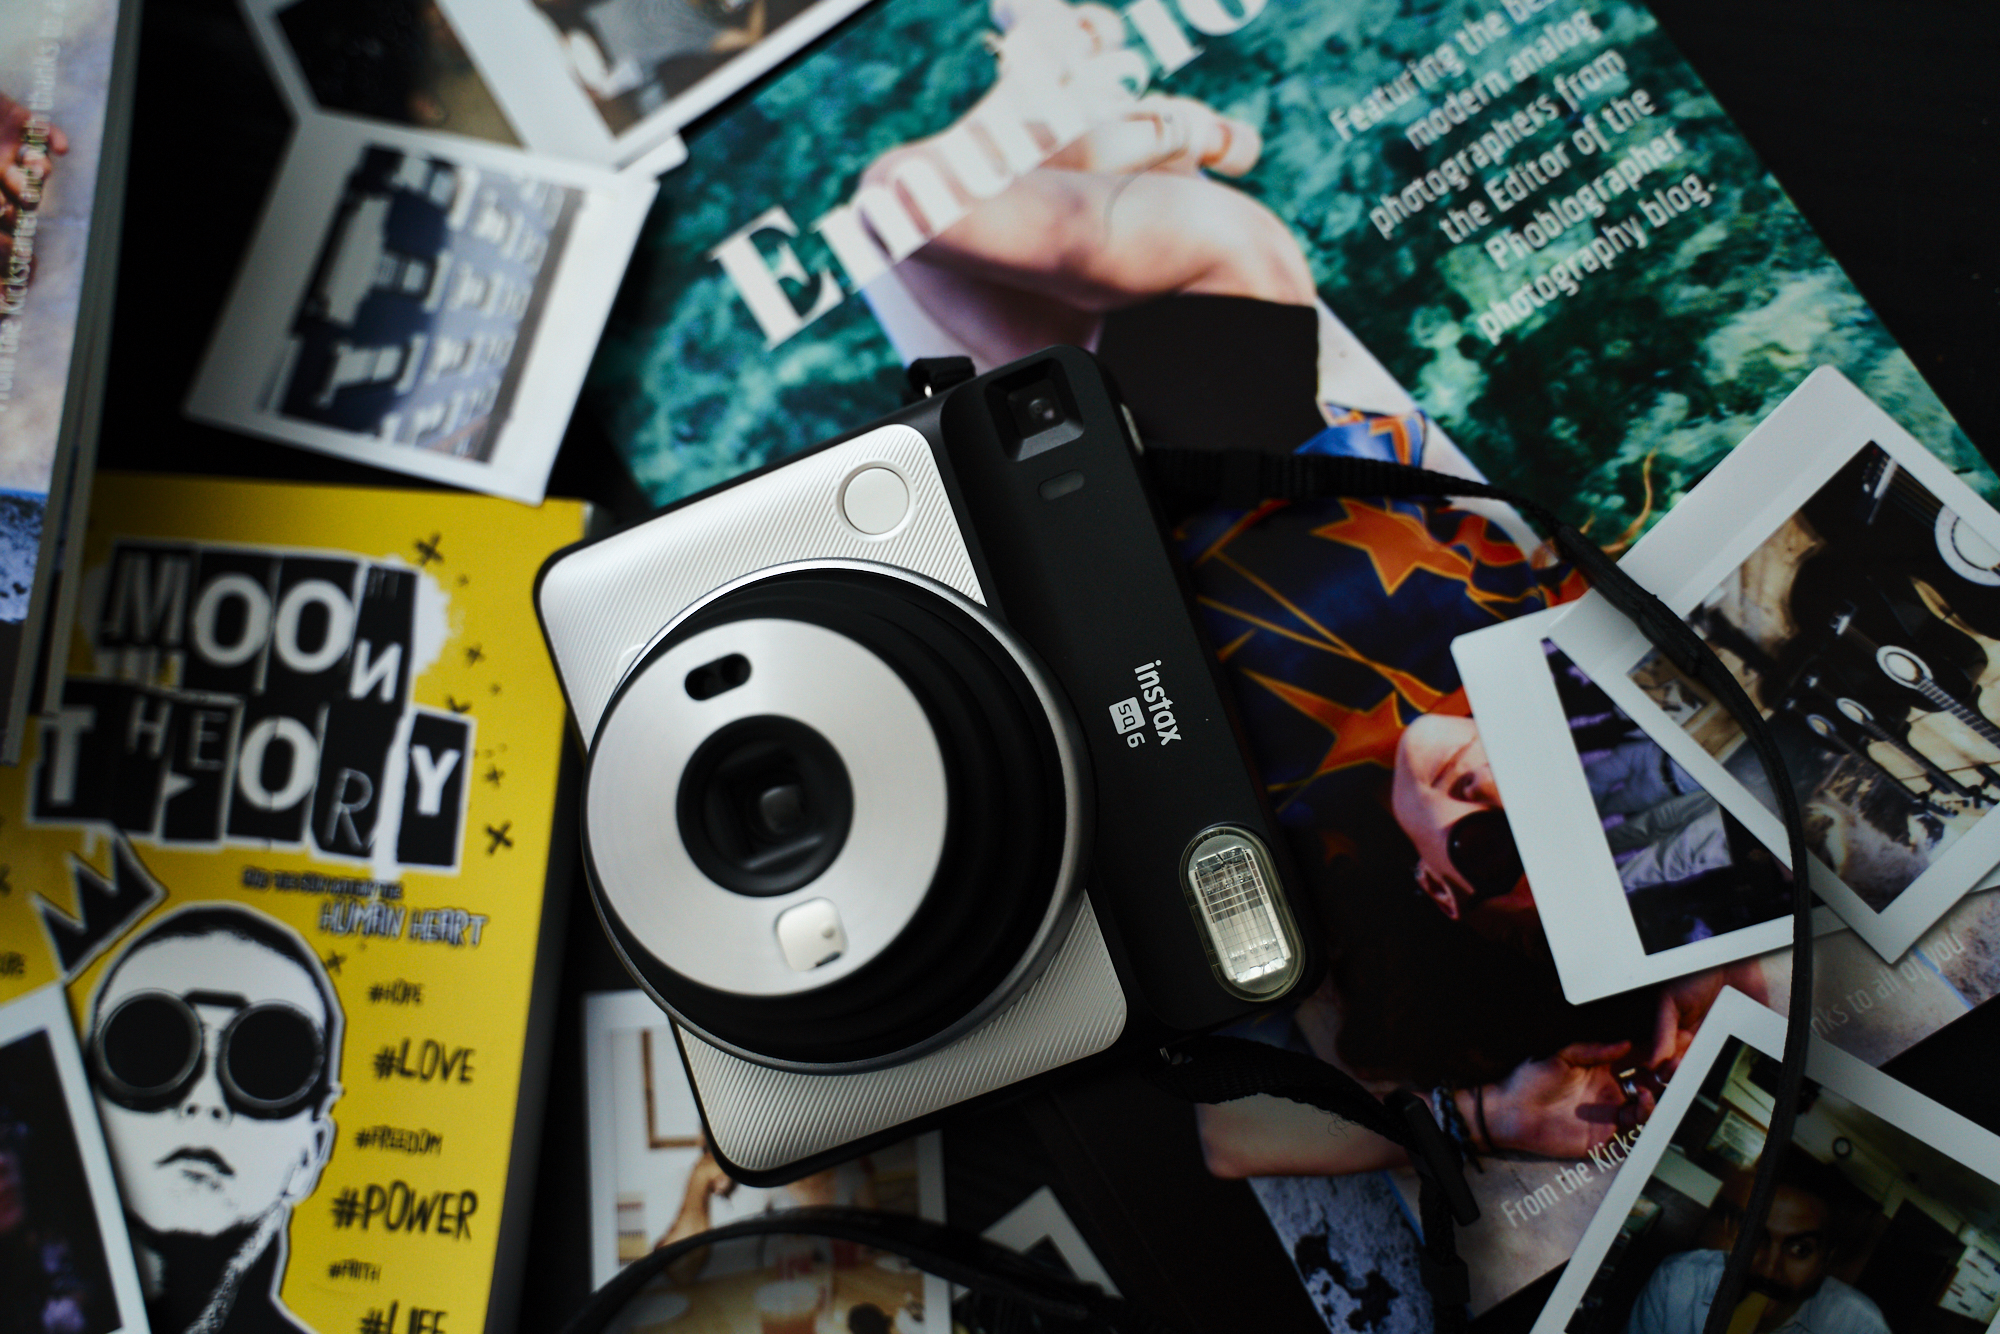 Fstoppers Reviews Fujifilm Instax Square SQ6 Camera: Medium Format in Your  Pocket